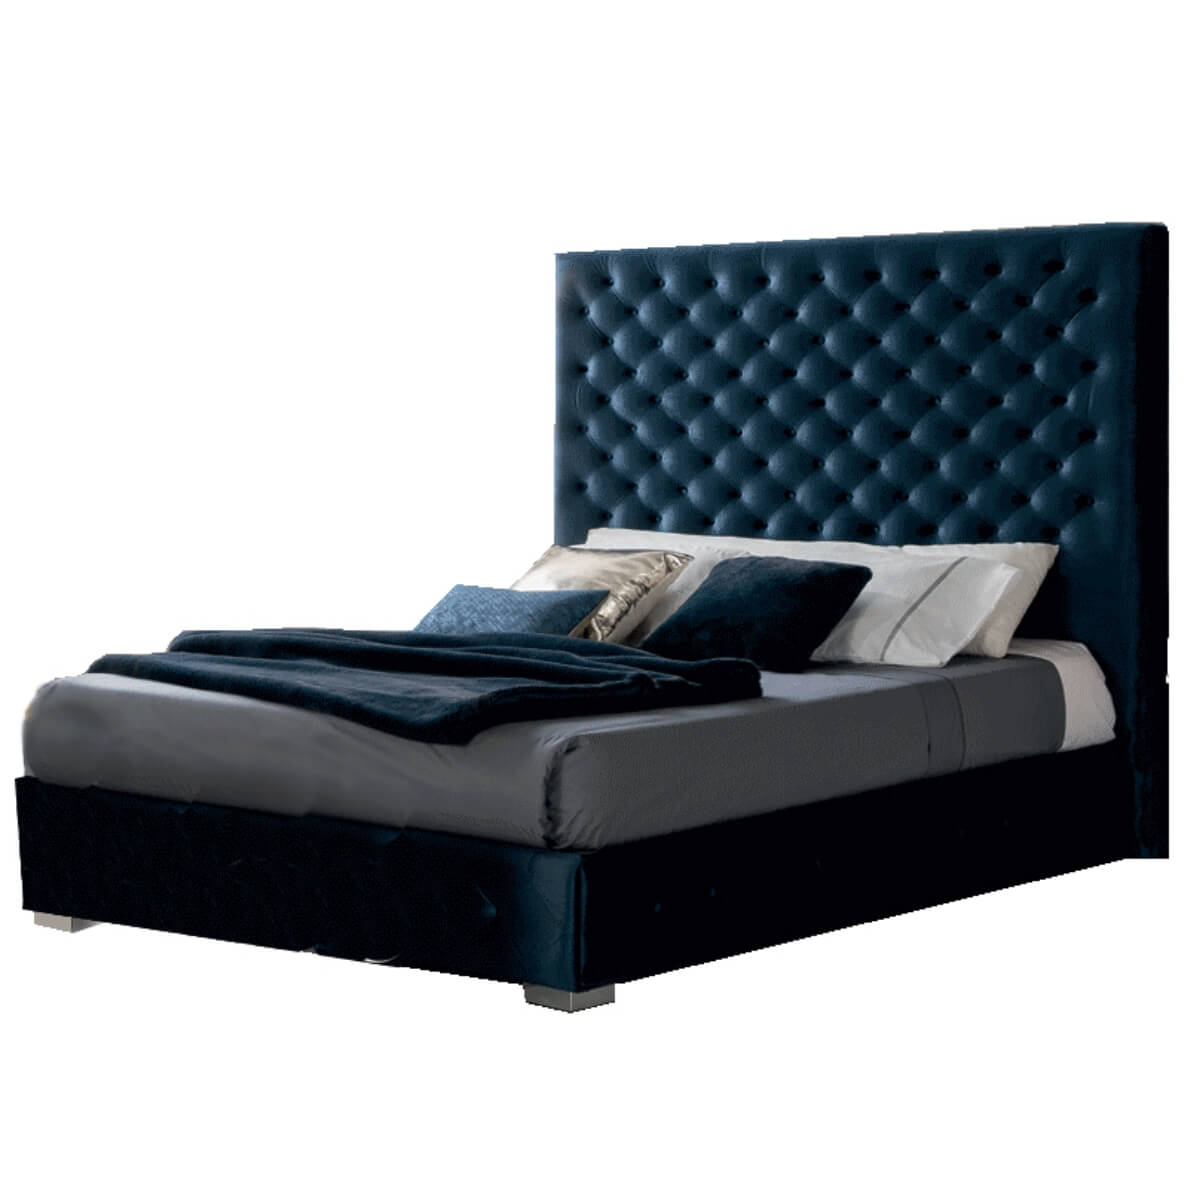 Majestic Slumber Luxurious velvet Bed